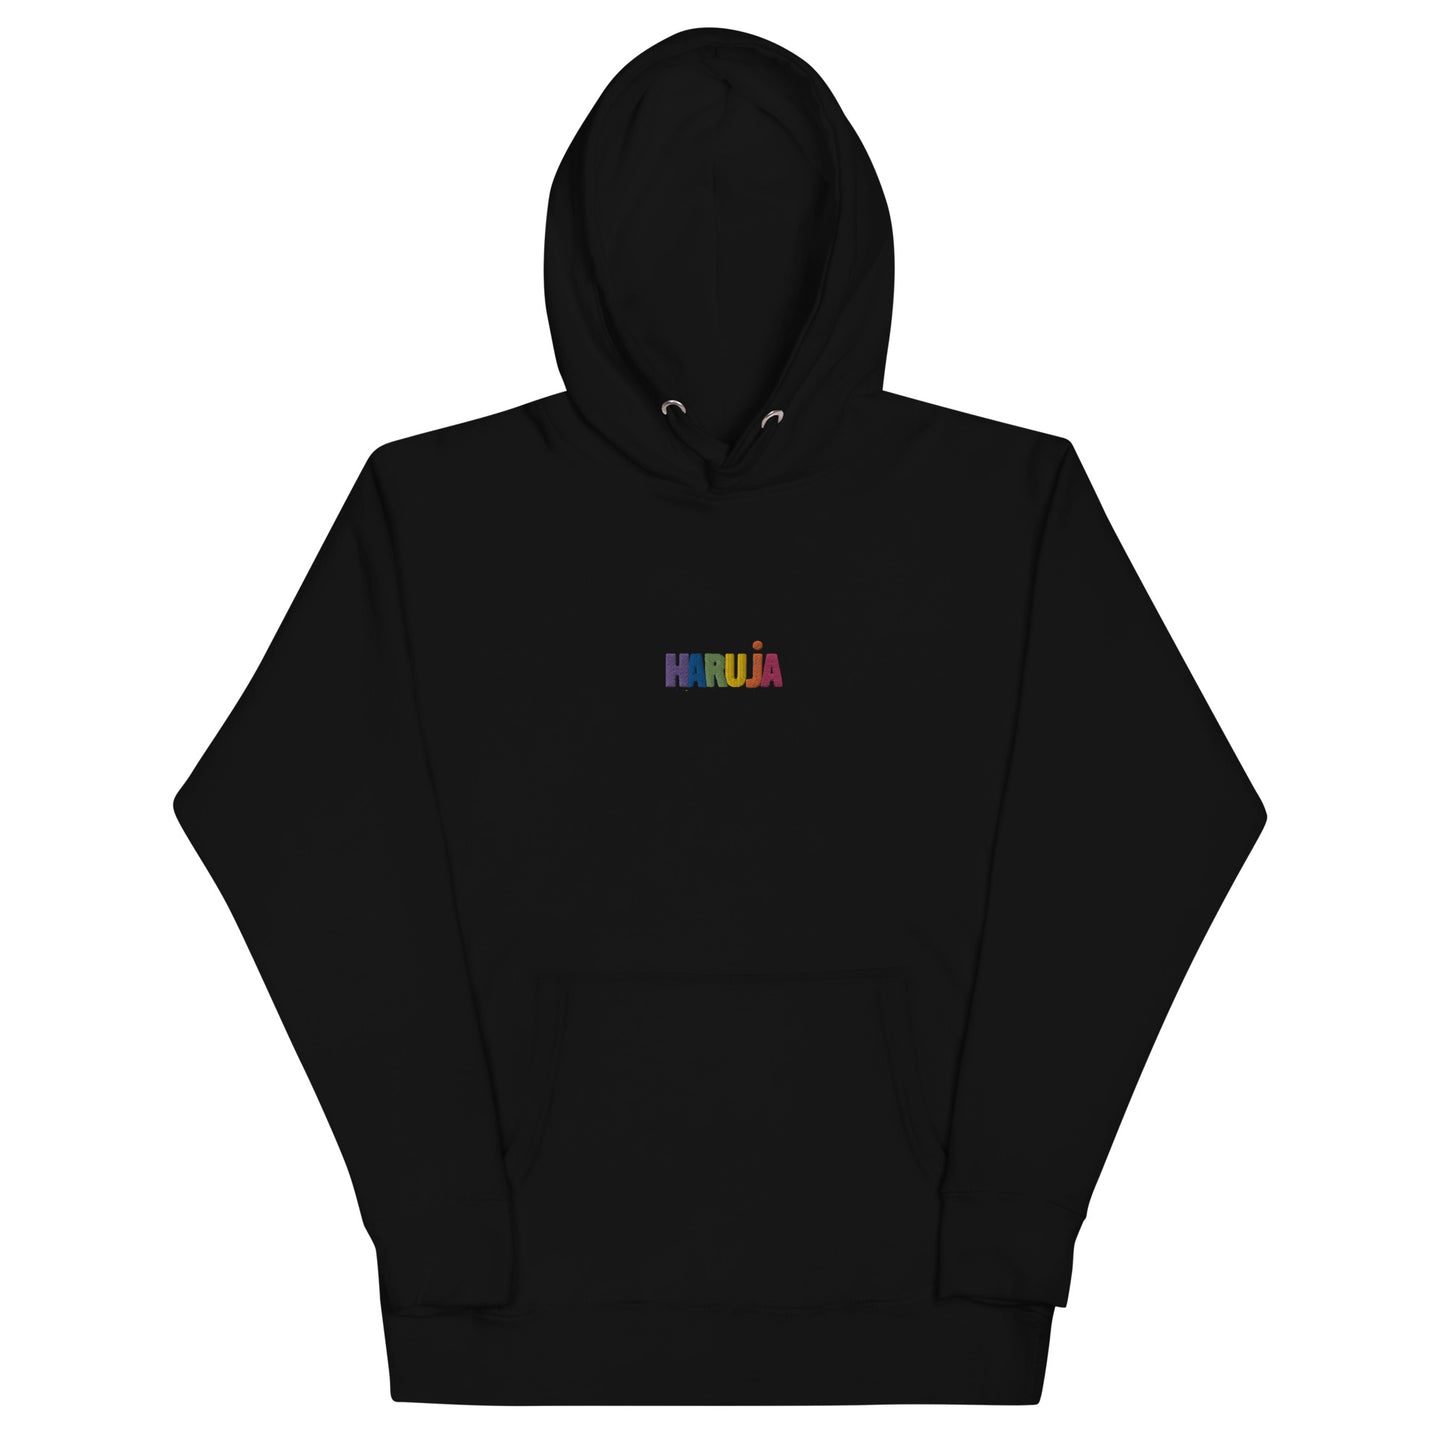 Haruja - Multicolored Embroidered black hoodie